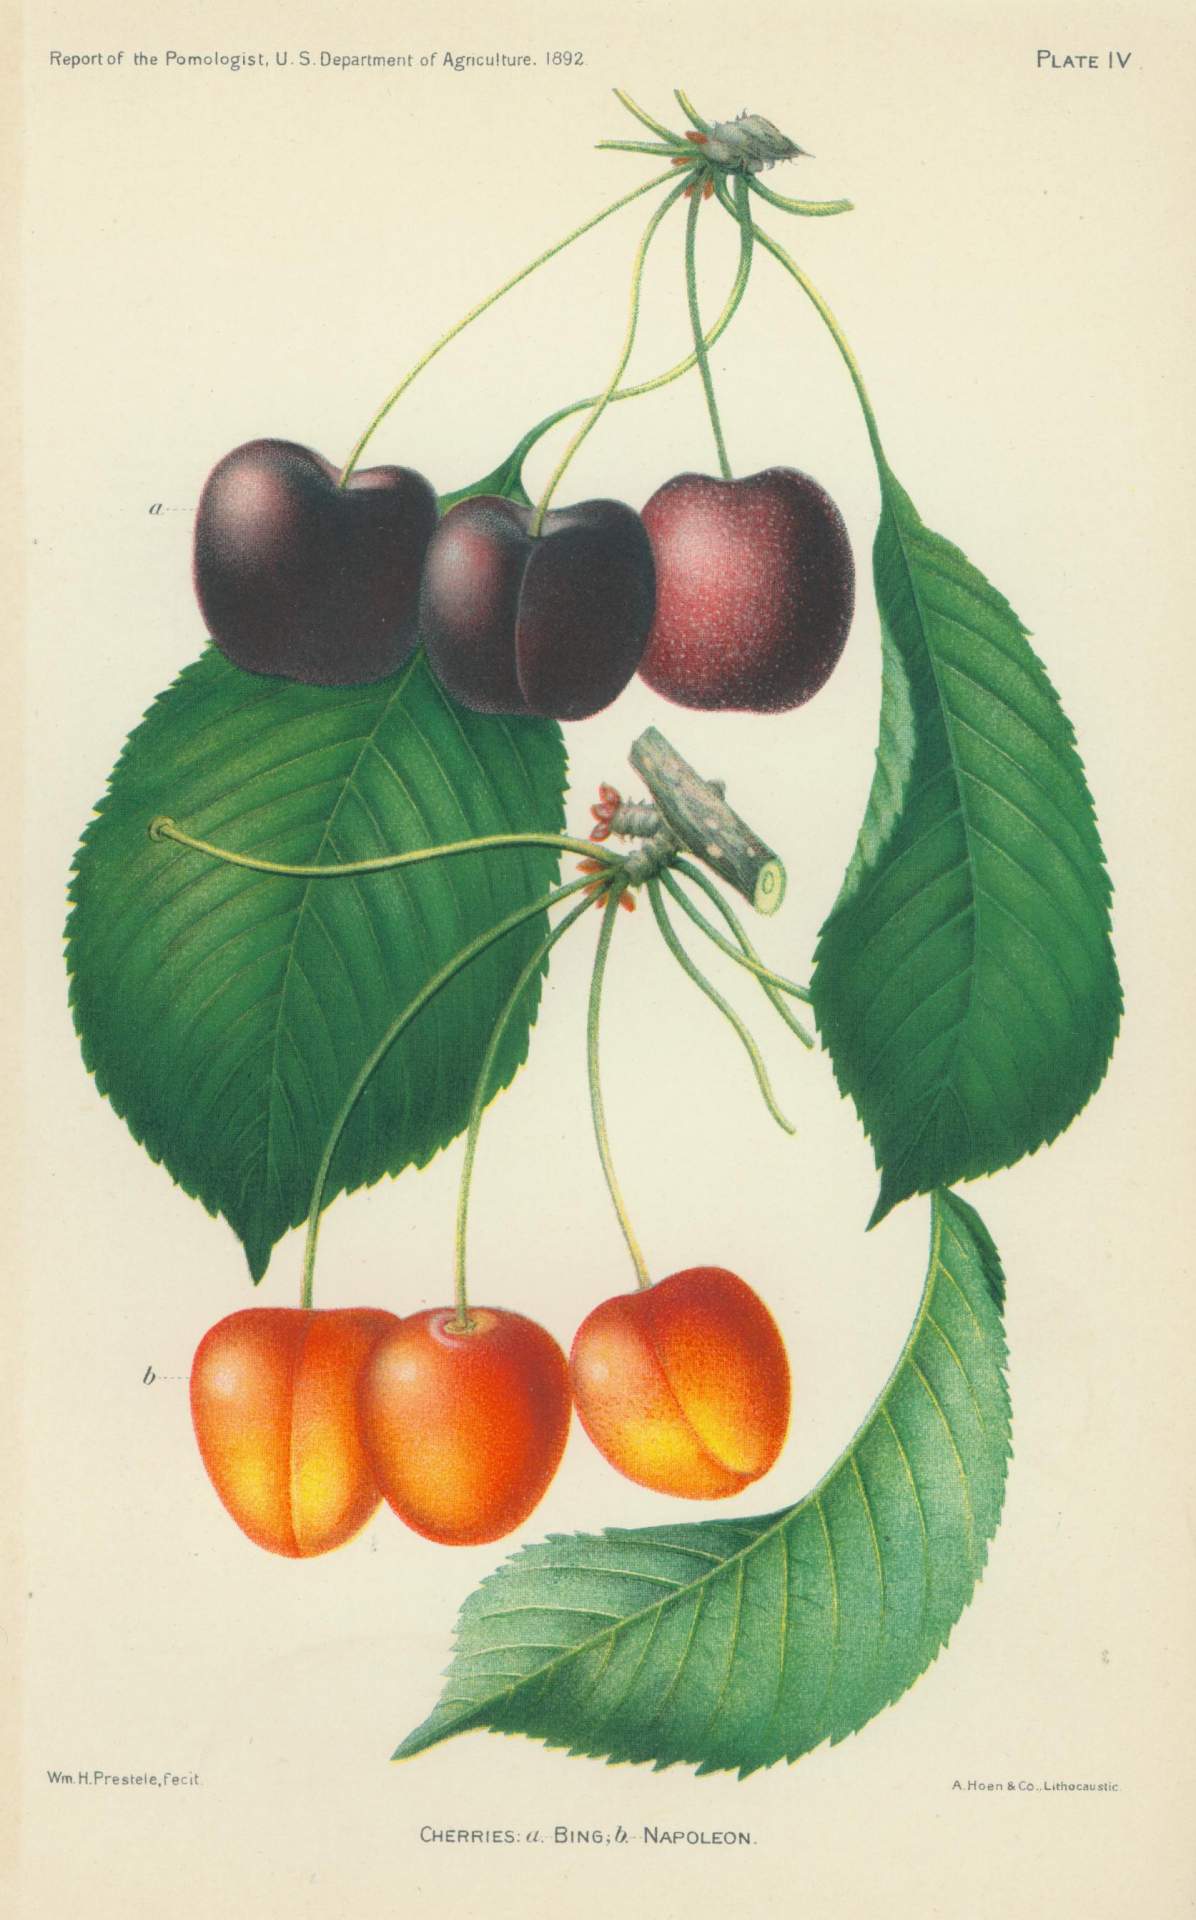 Cherries: a.- Bing, b.- Napoleon